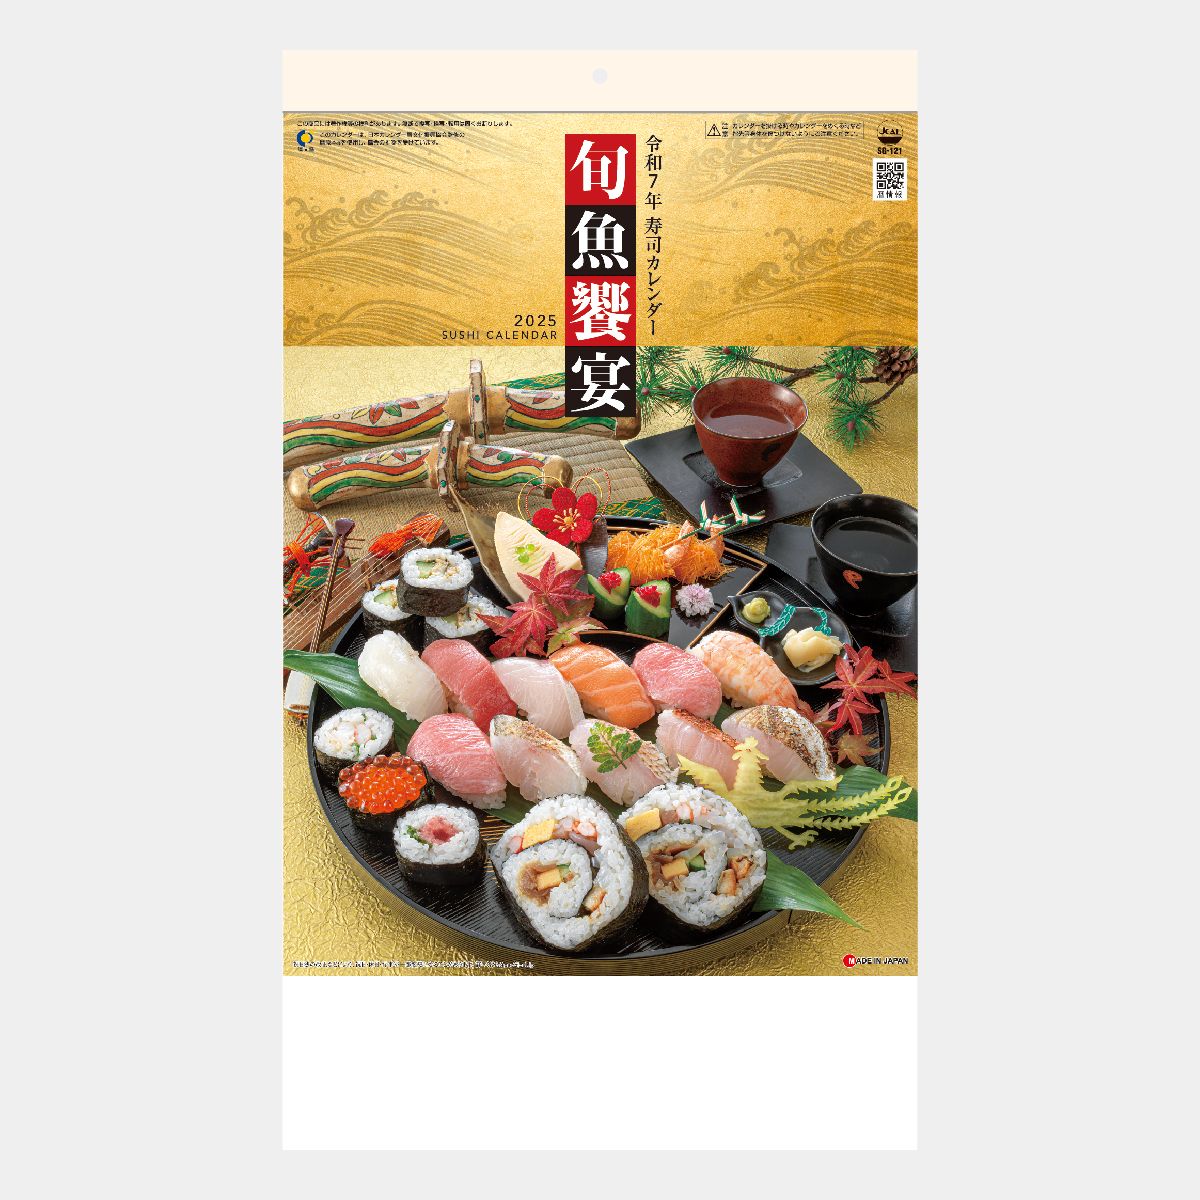 Sg 121 寿司カレンダー 22年版の名入れカレンダーを格安で販売 名入れカレンダー印刷 Com